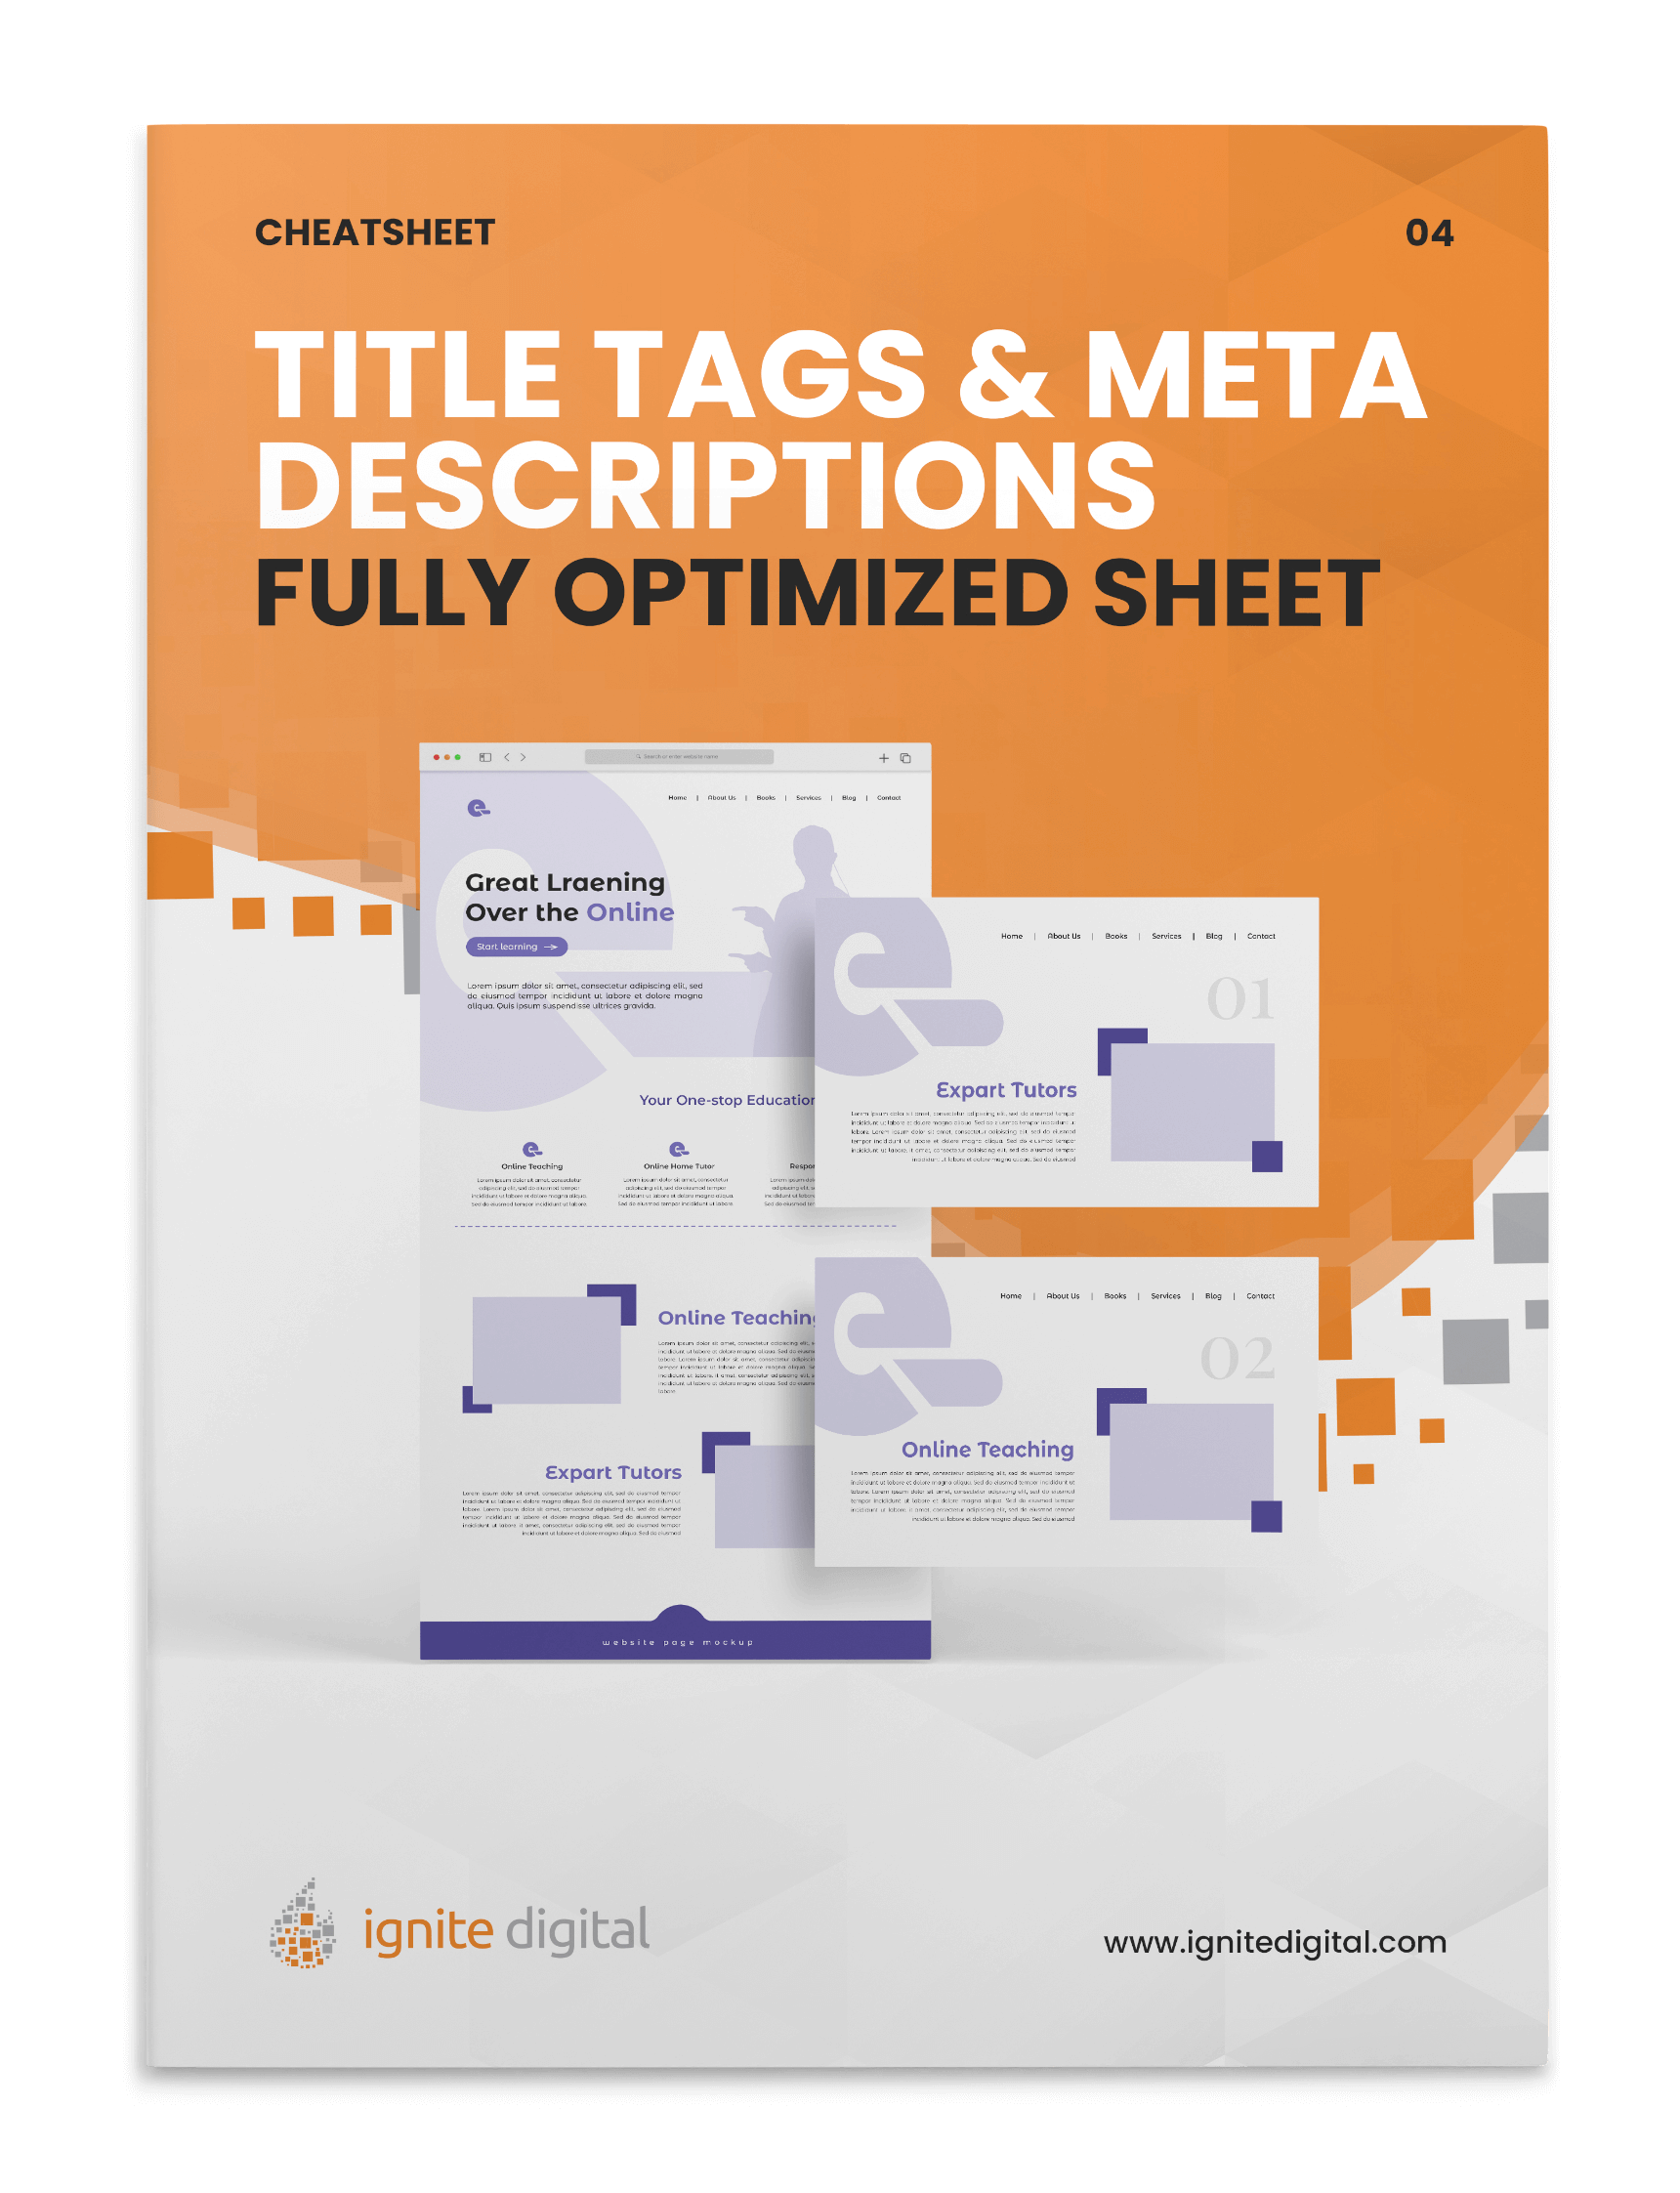 title tags & meta descriptions fully optimized sheet